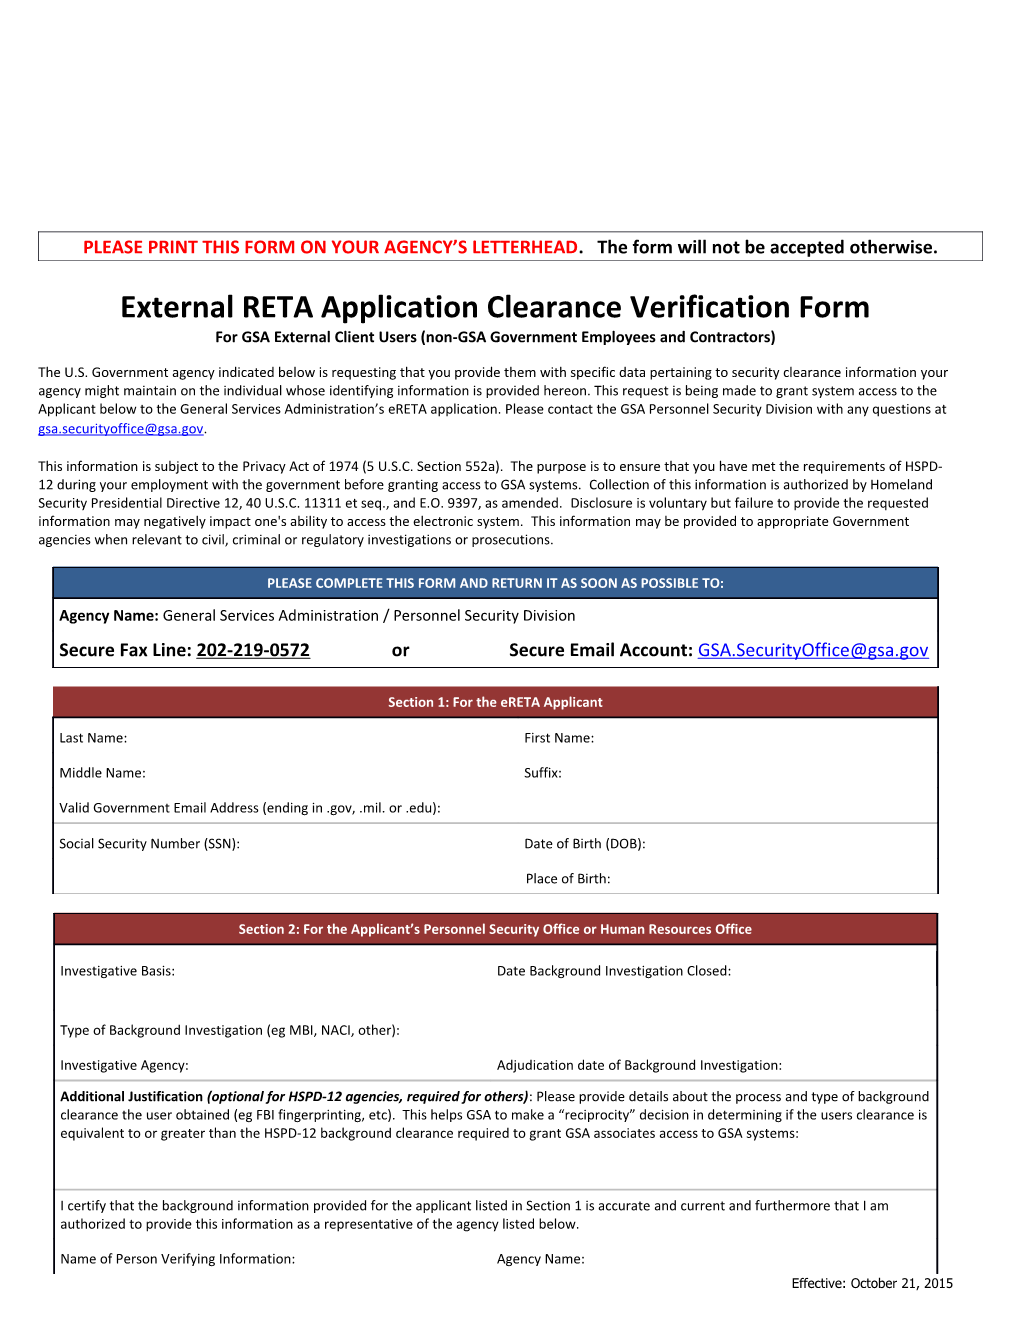 External Retaapplication Clearance Verification Form